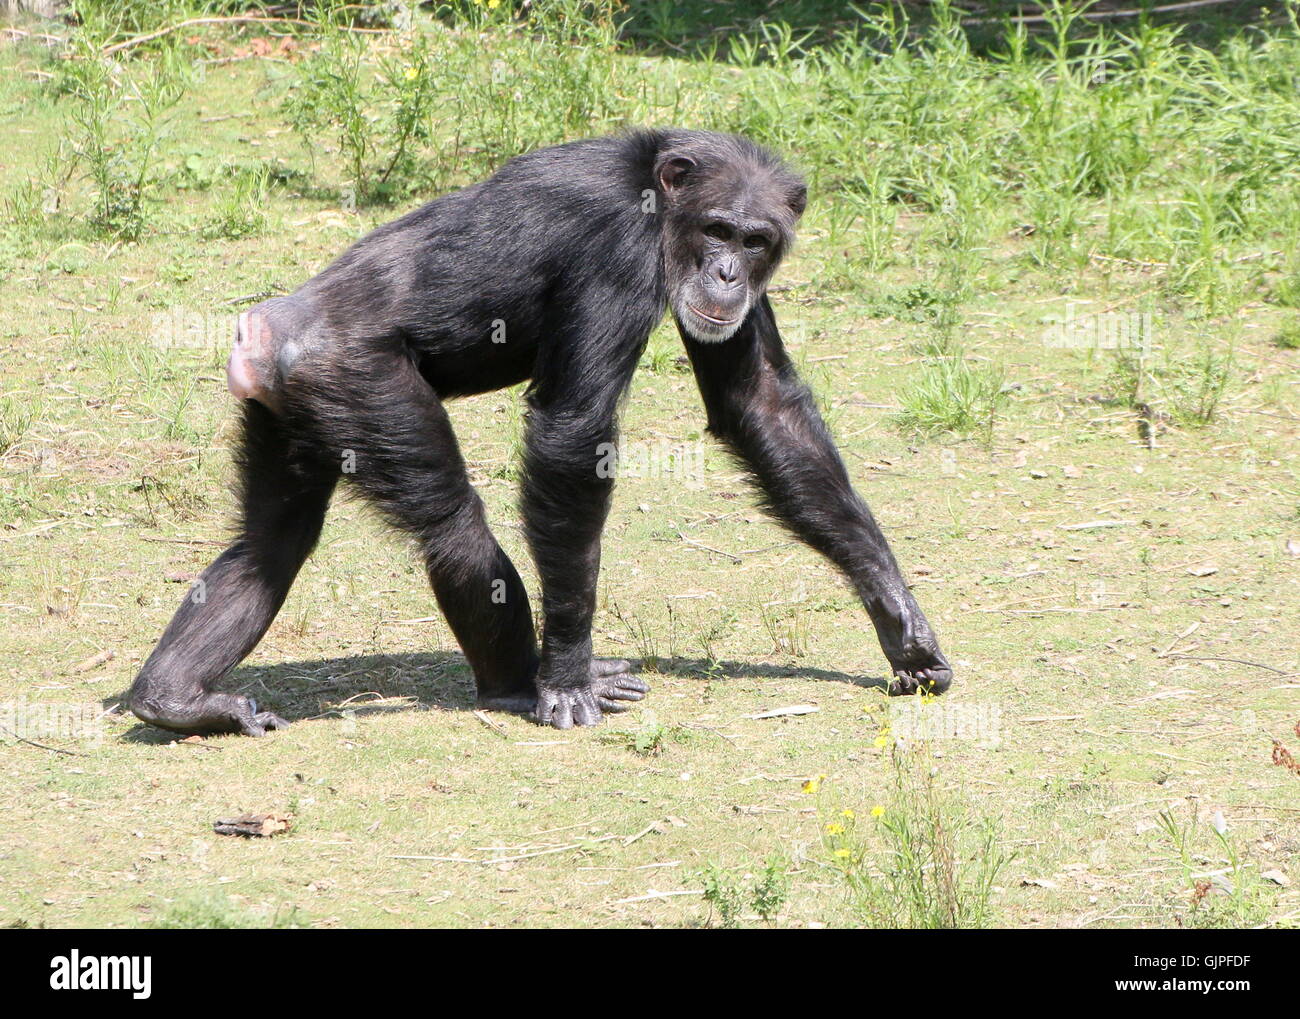 Mature male Common chimpanzee (Pan troglodytes) walking past, looking at the camera Stock Photo